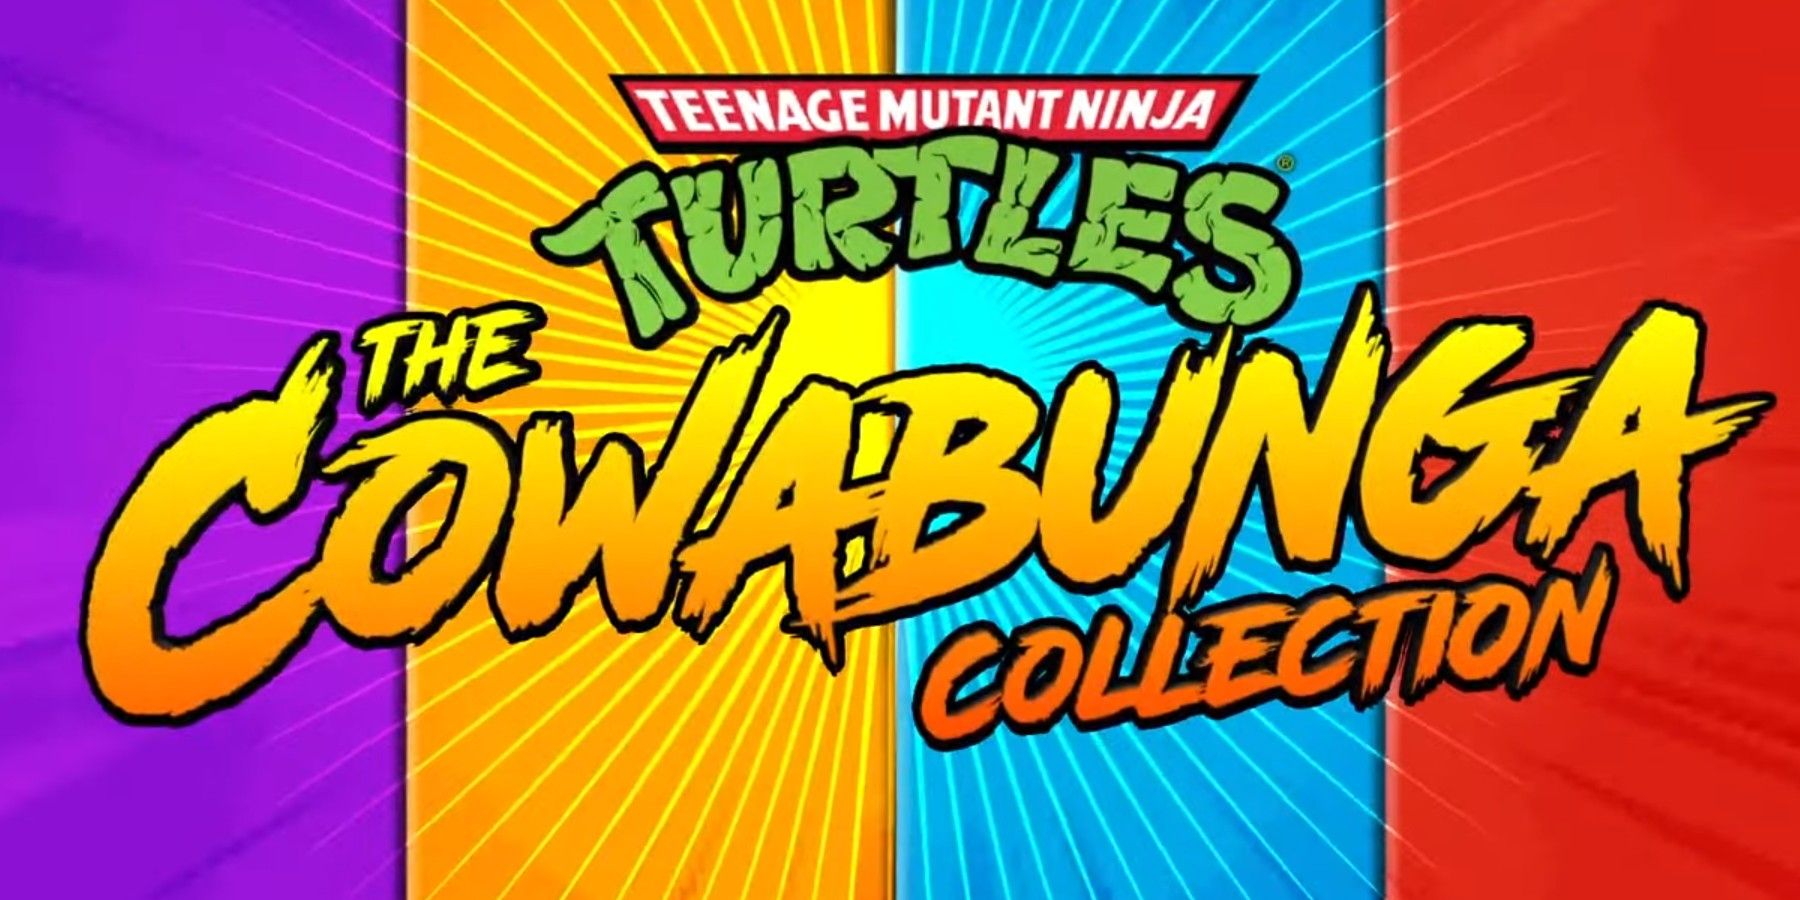 Teenage Mutant Ninja Turtles Cowabunga Collection Featured